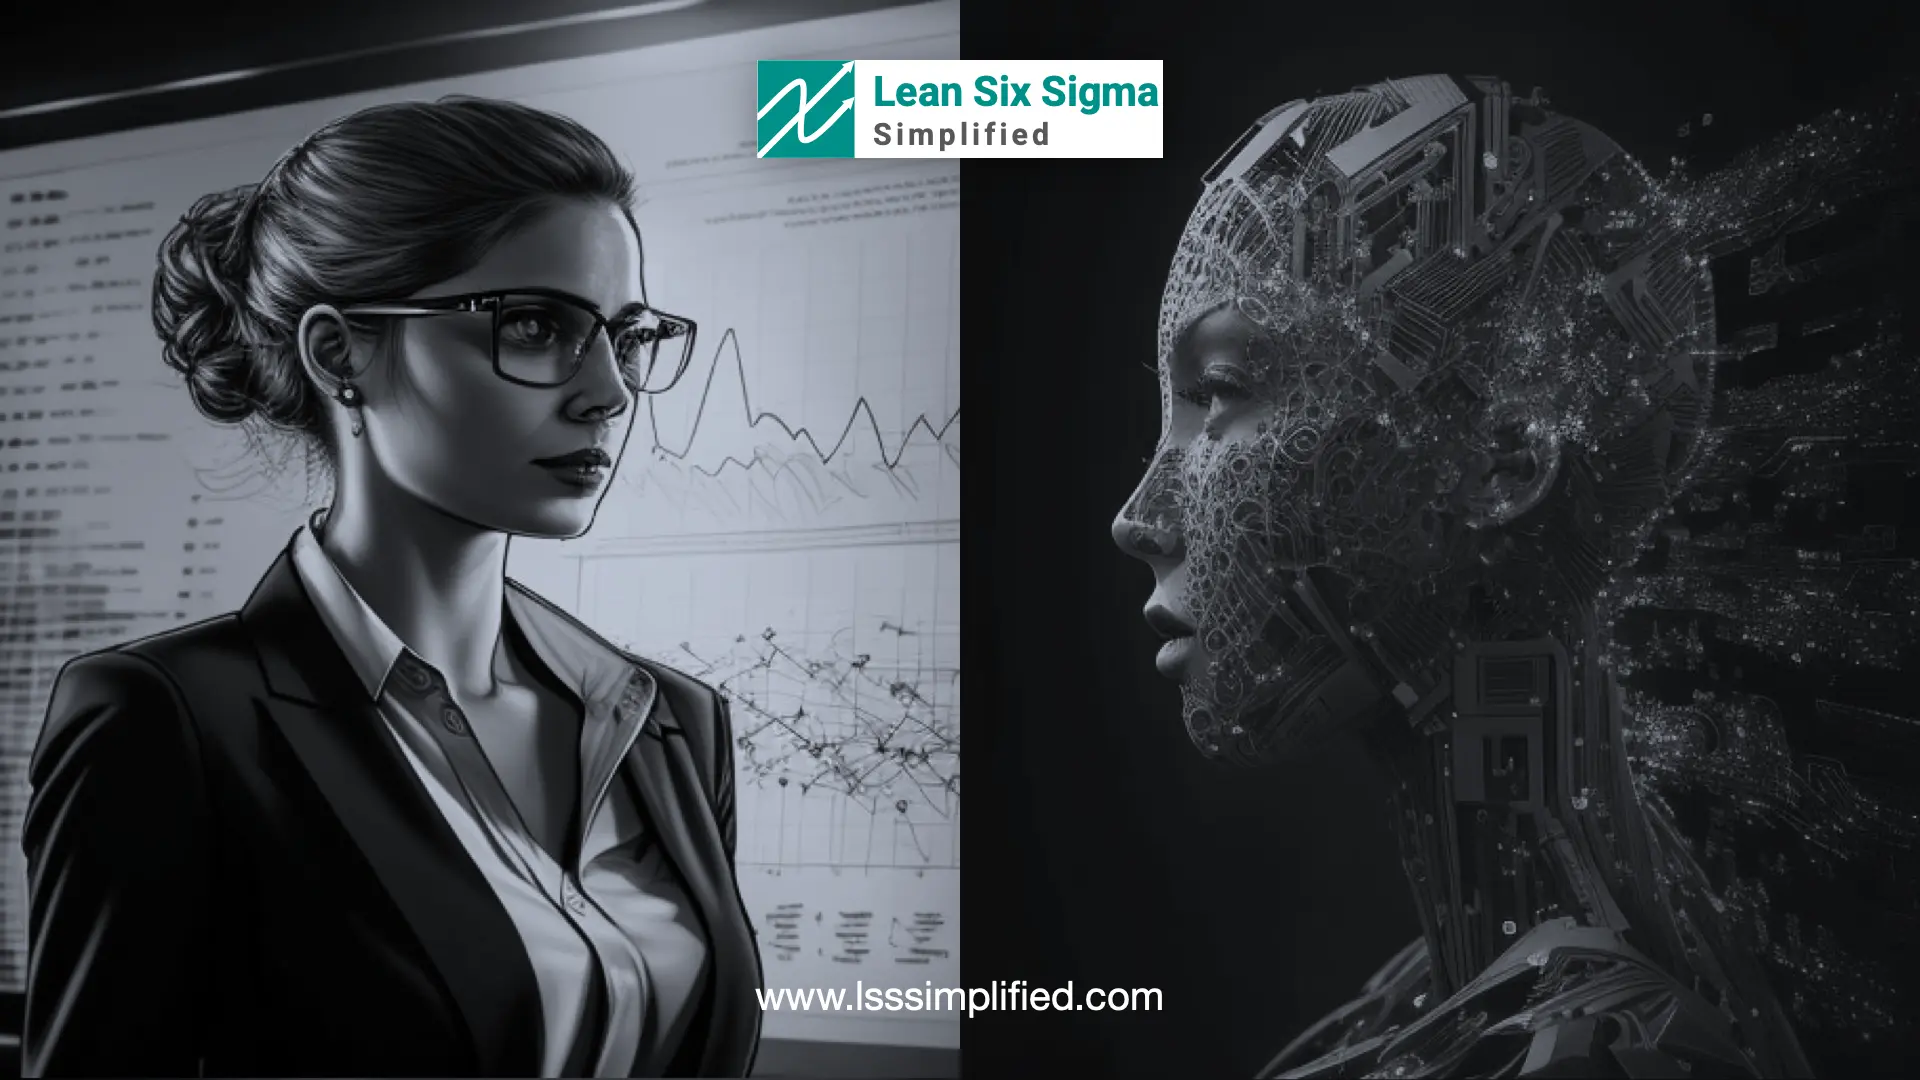 Lean Six Sigma and AI - Next Generation Lean Six Sigma